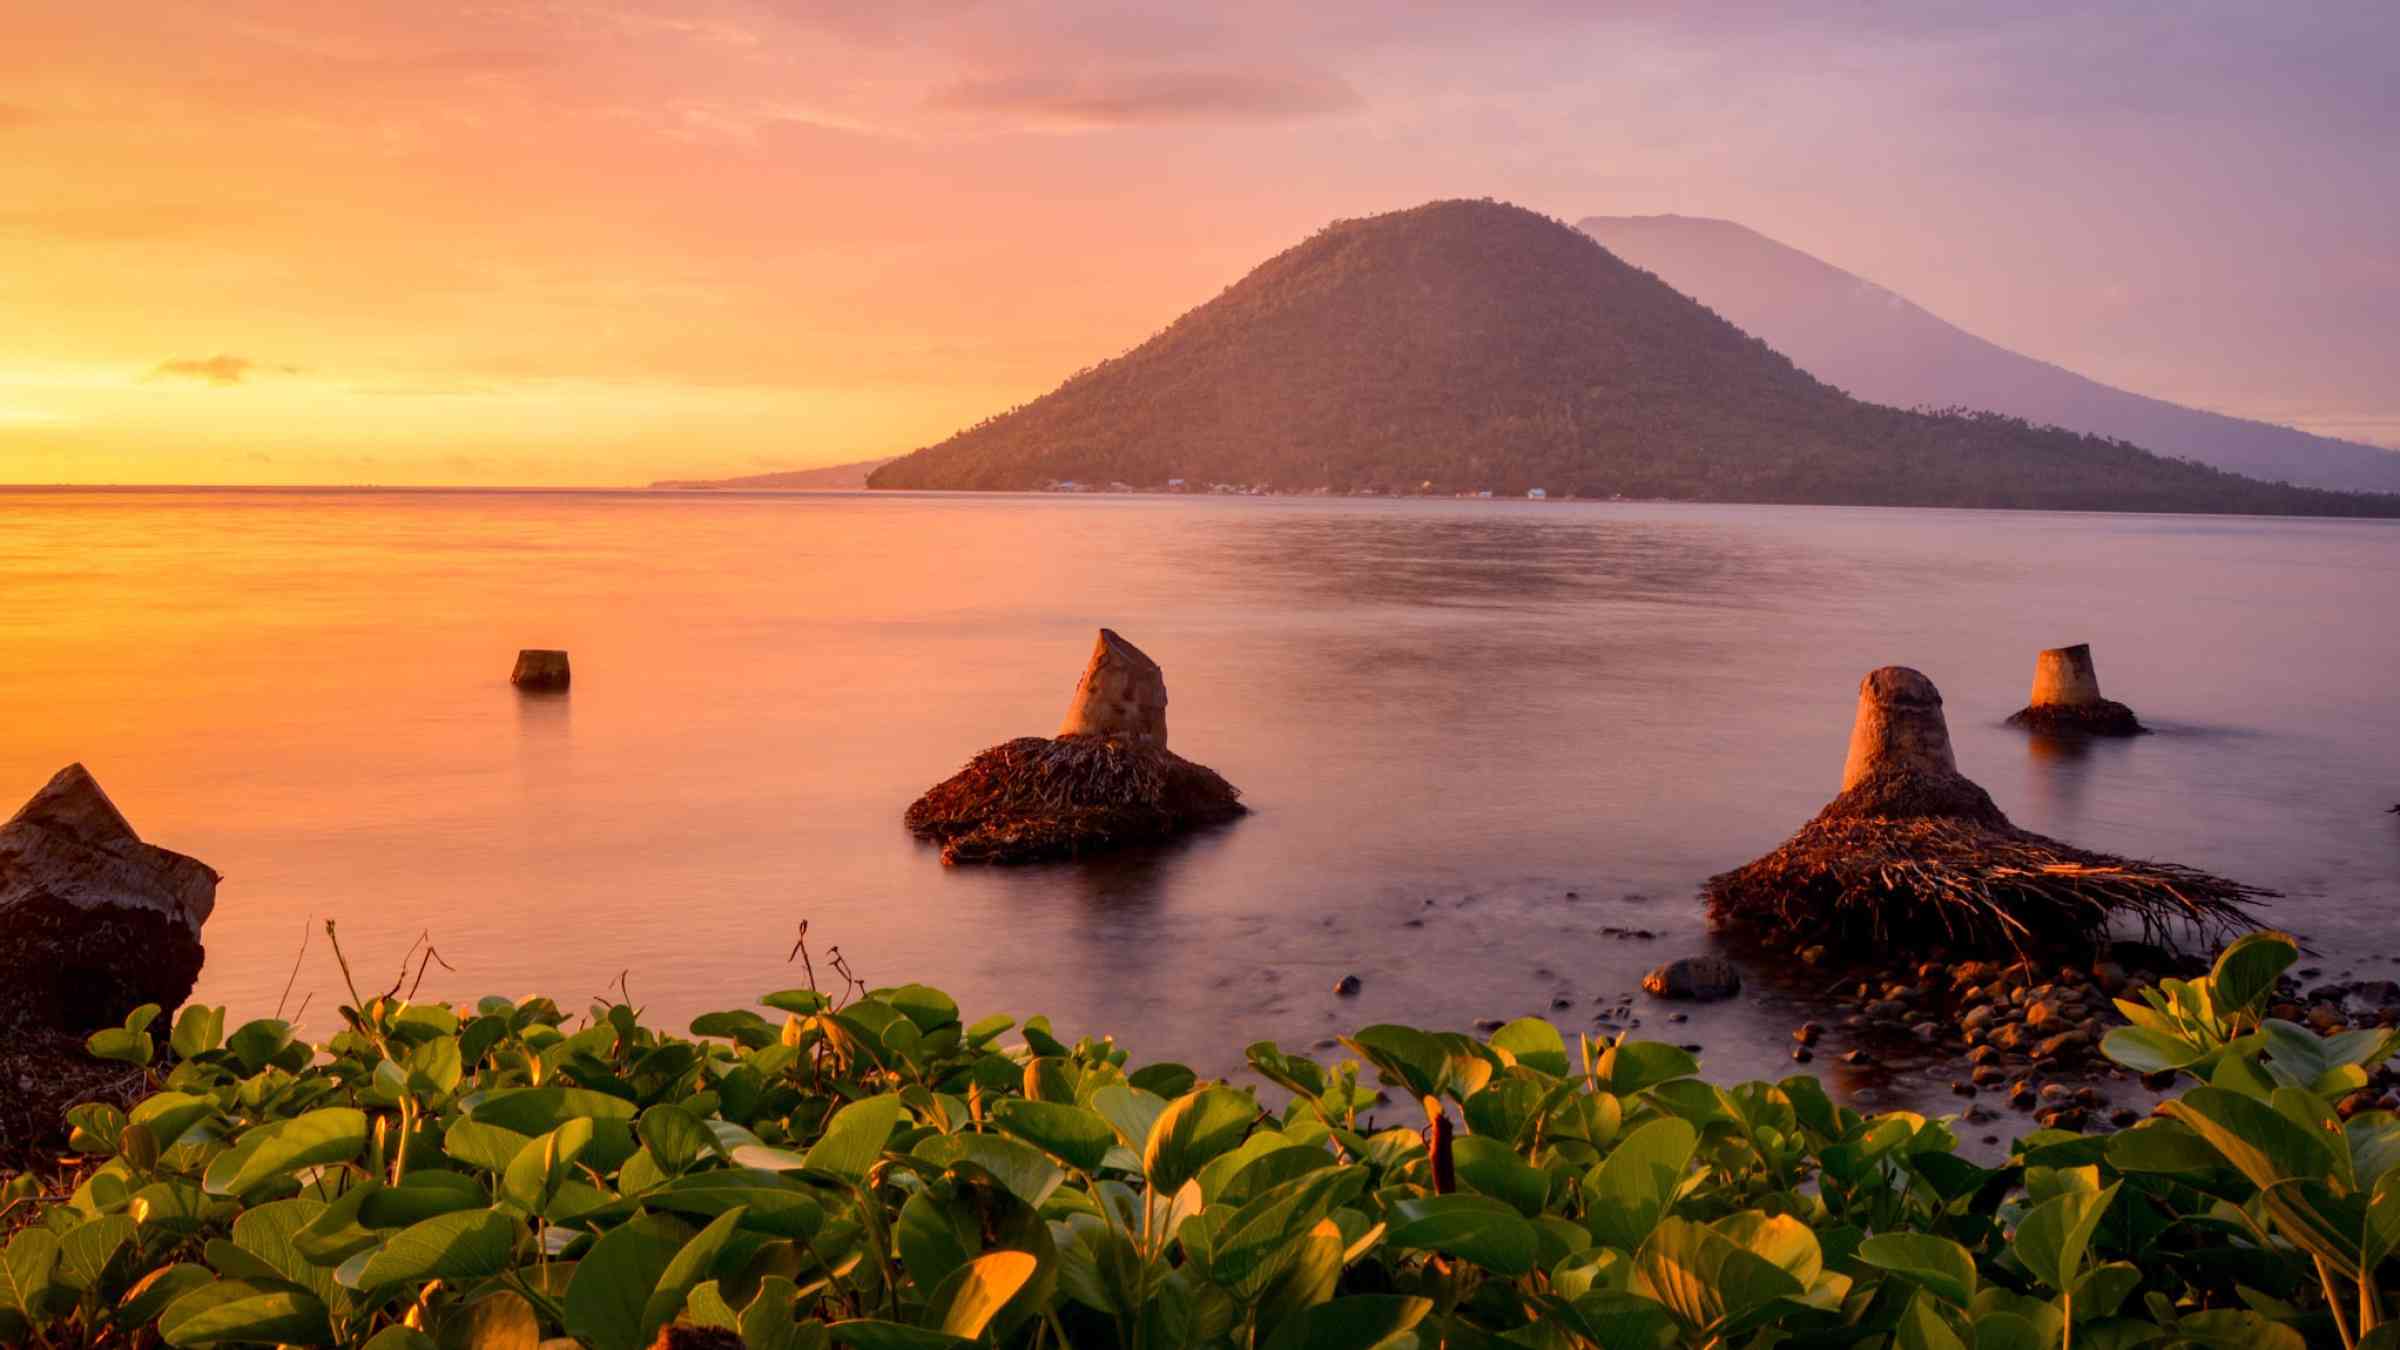 Sunset at Maluku sea, Indonesia